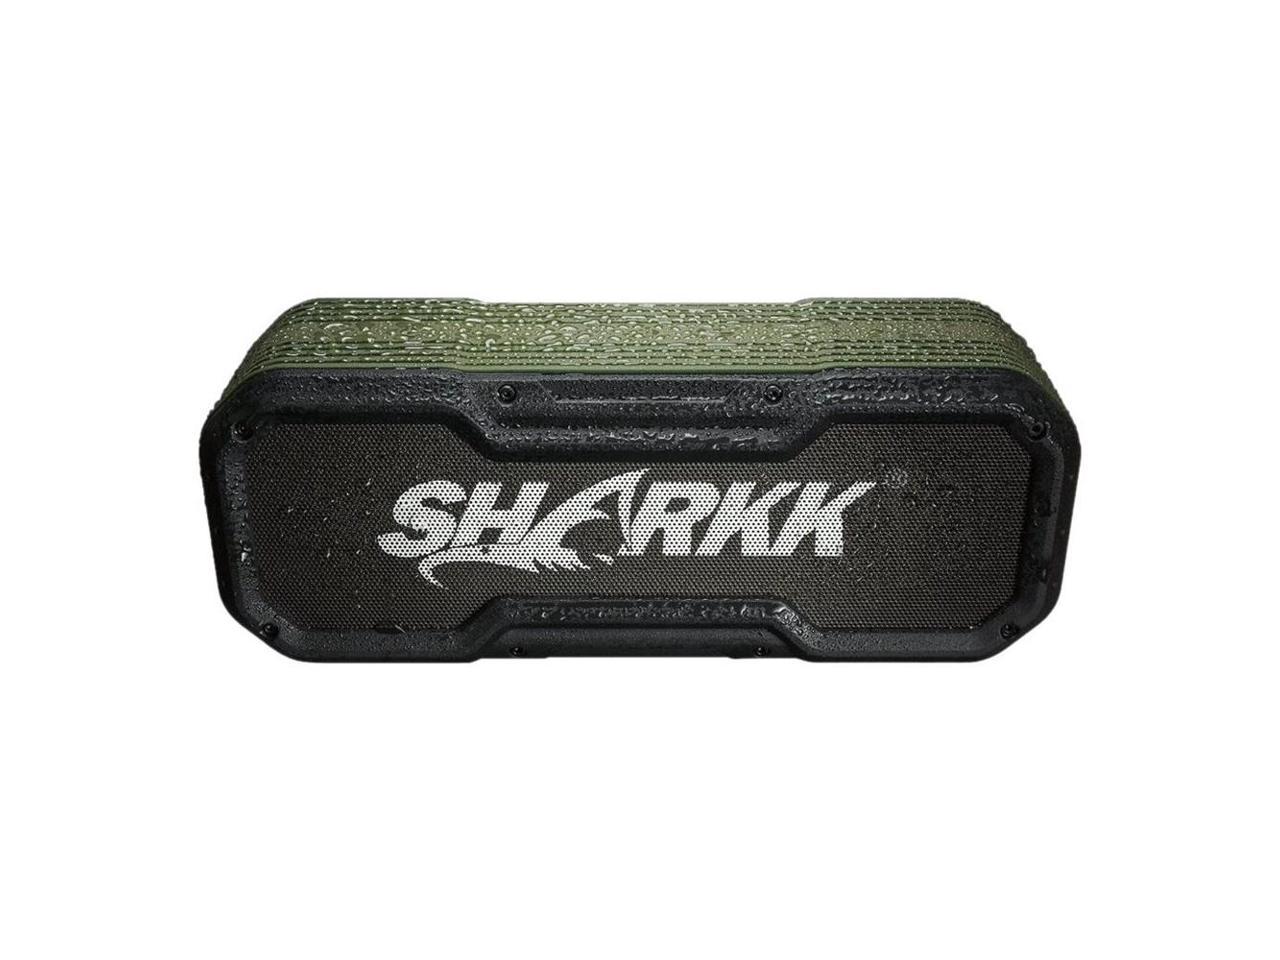 sharkk commando bluetooth speaker